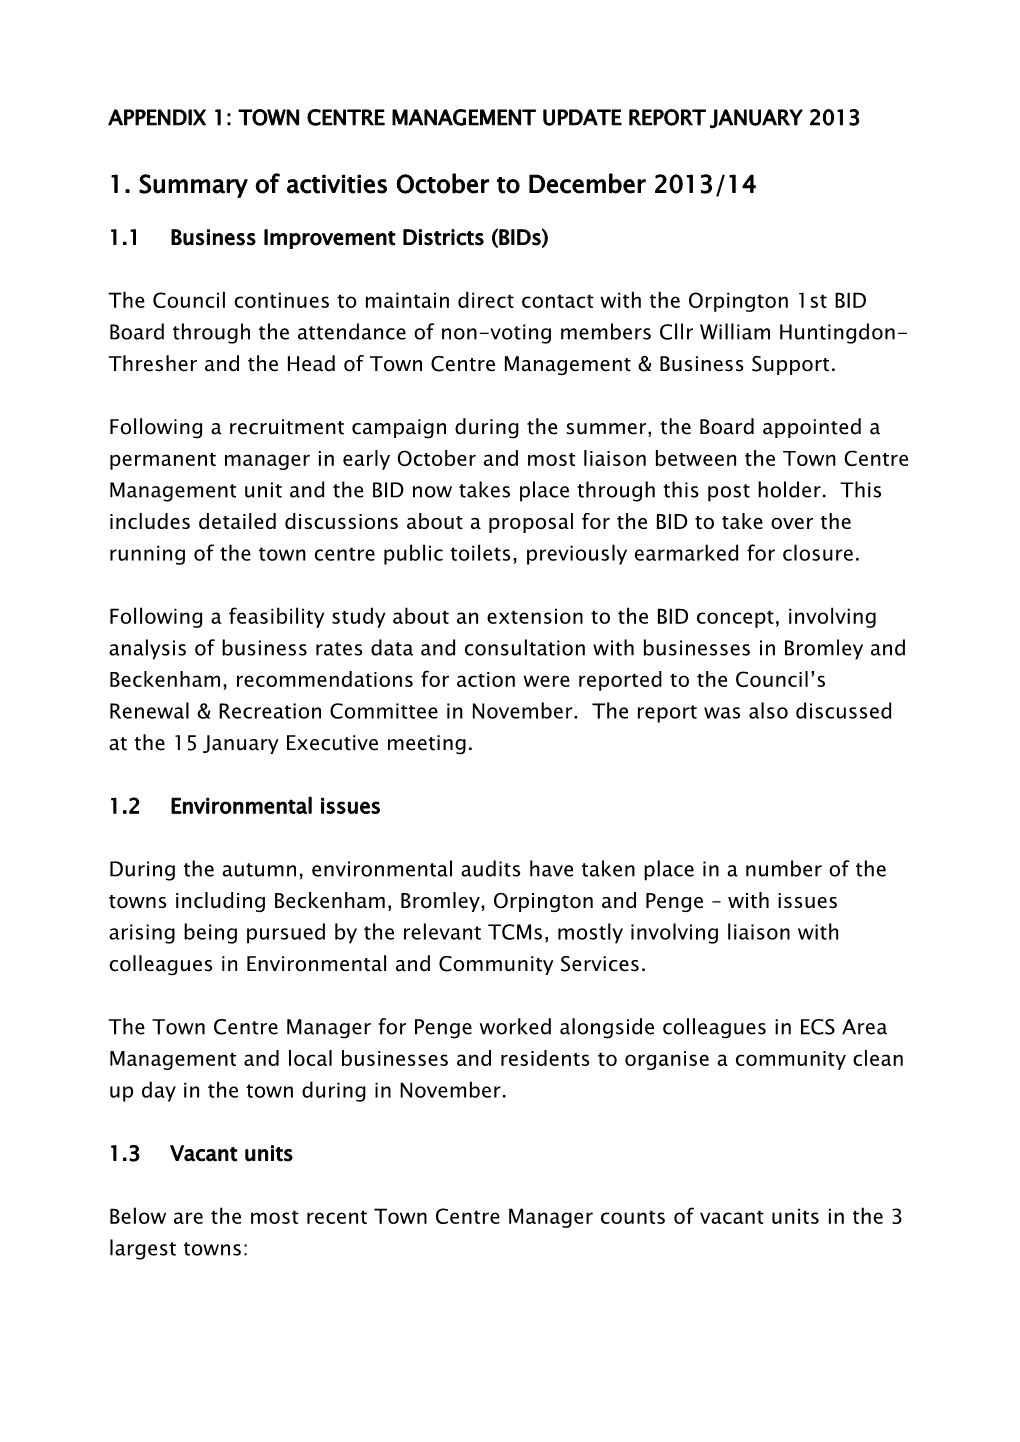 APPENDIX 1 for Town Centre Management Update Report